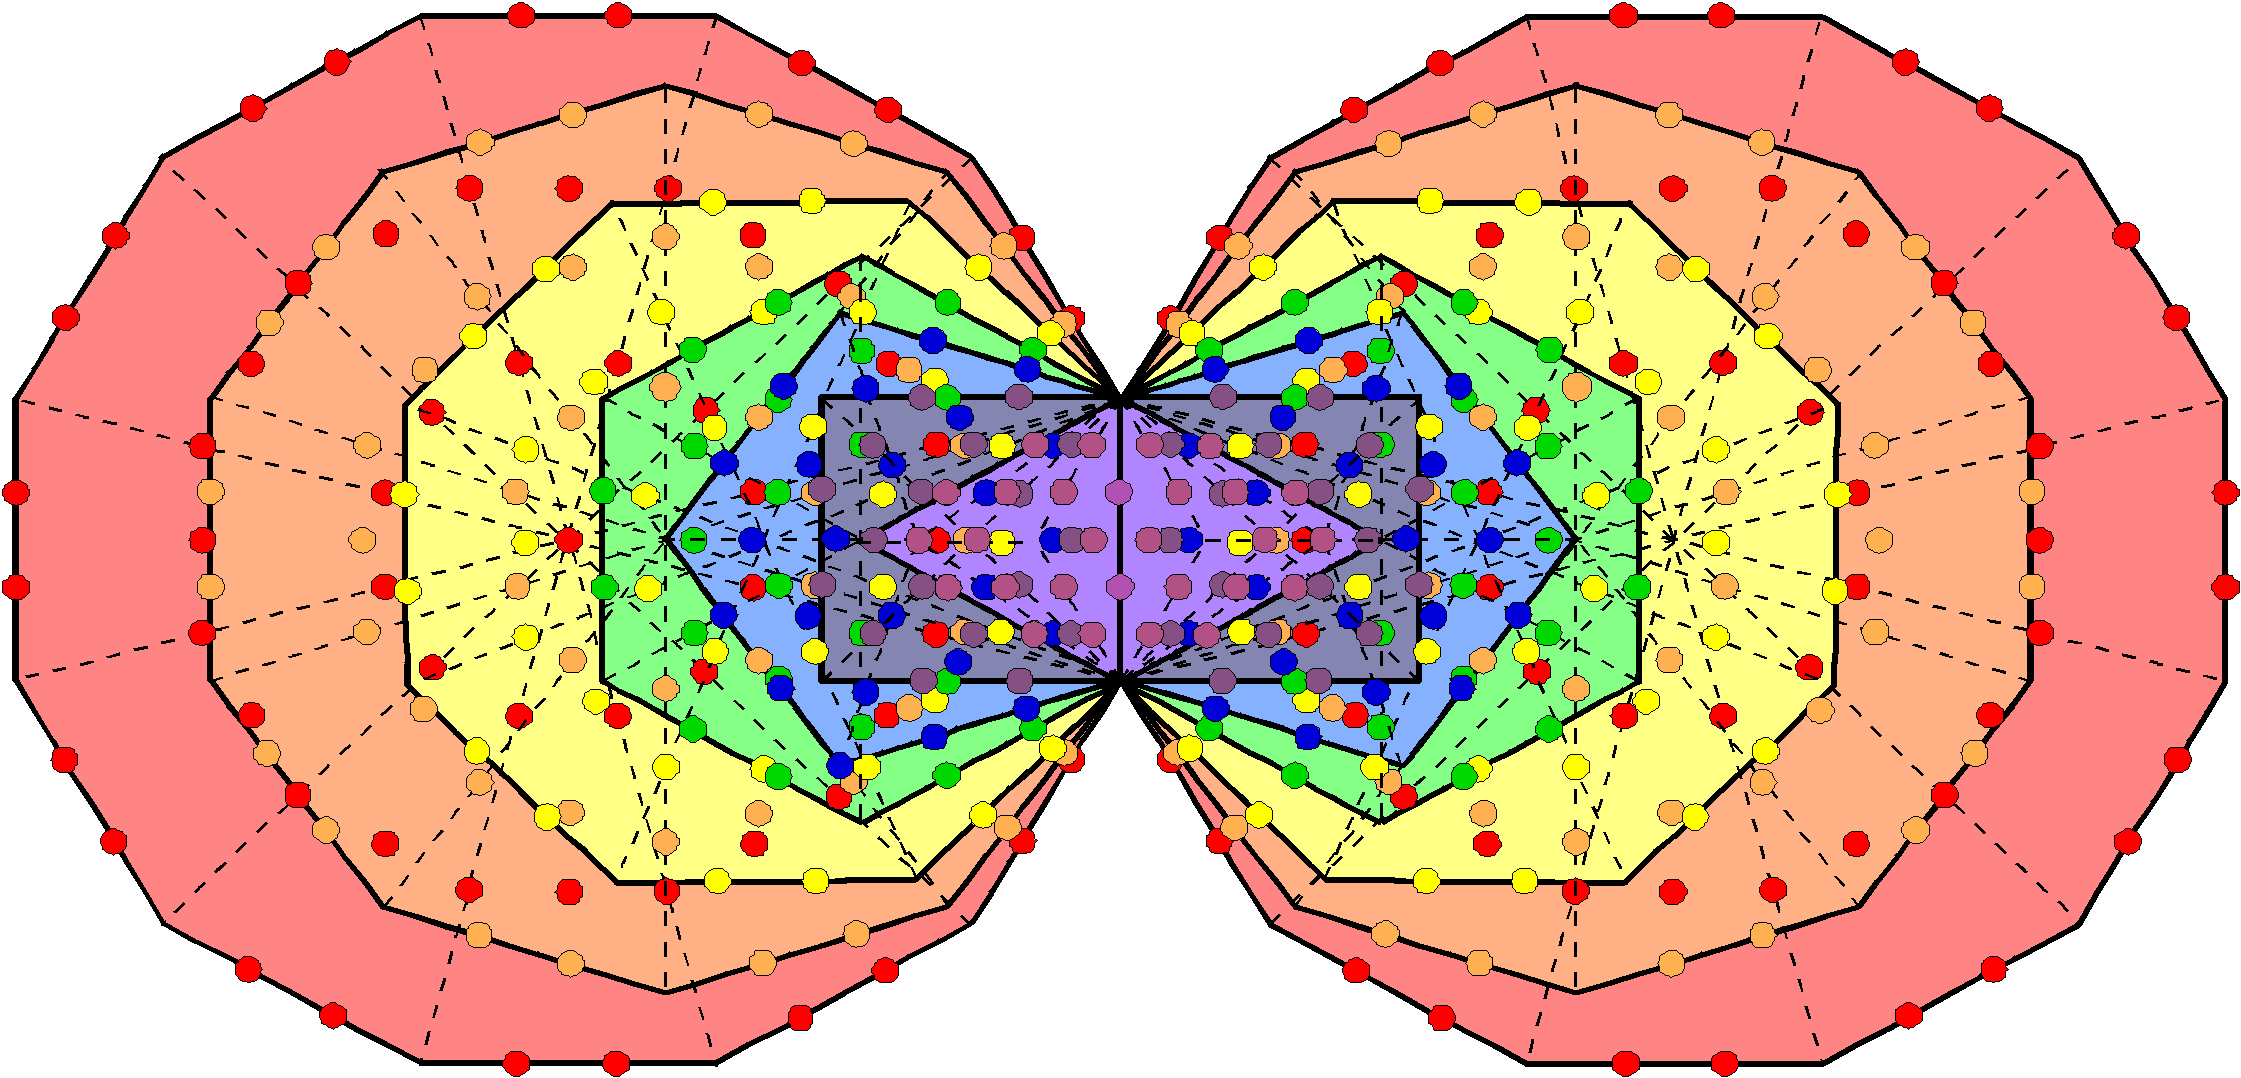 444 hexagonal yods in (7+7) enfolded polygons